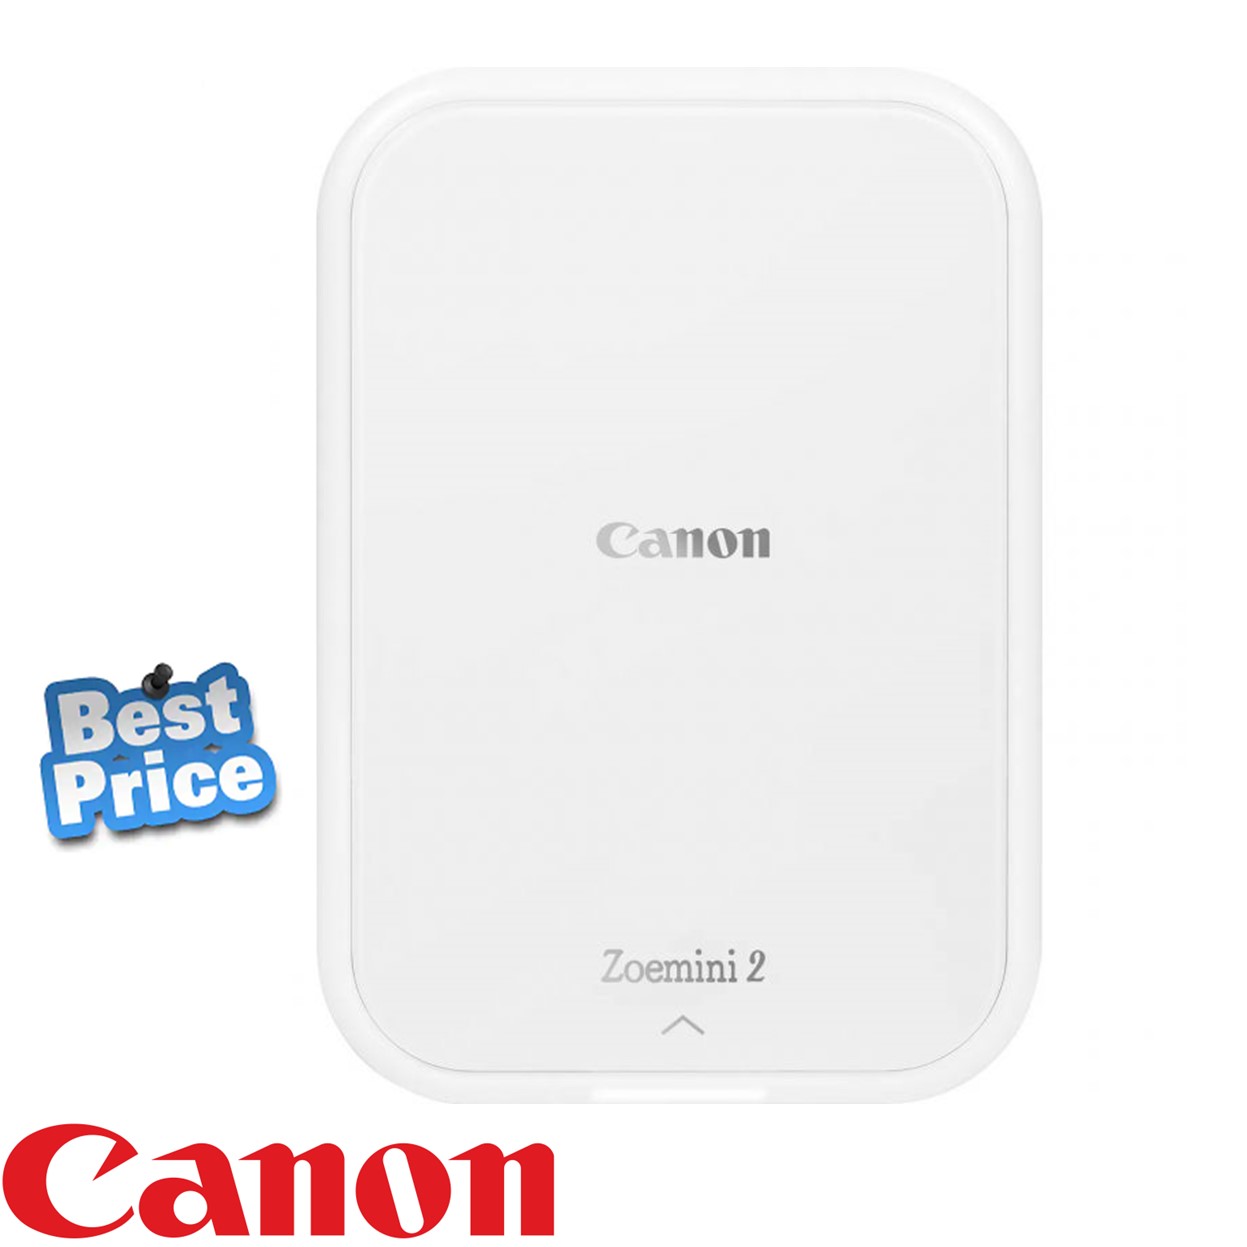 Canon Zoemini 2 Mini Photo Printer - White